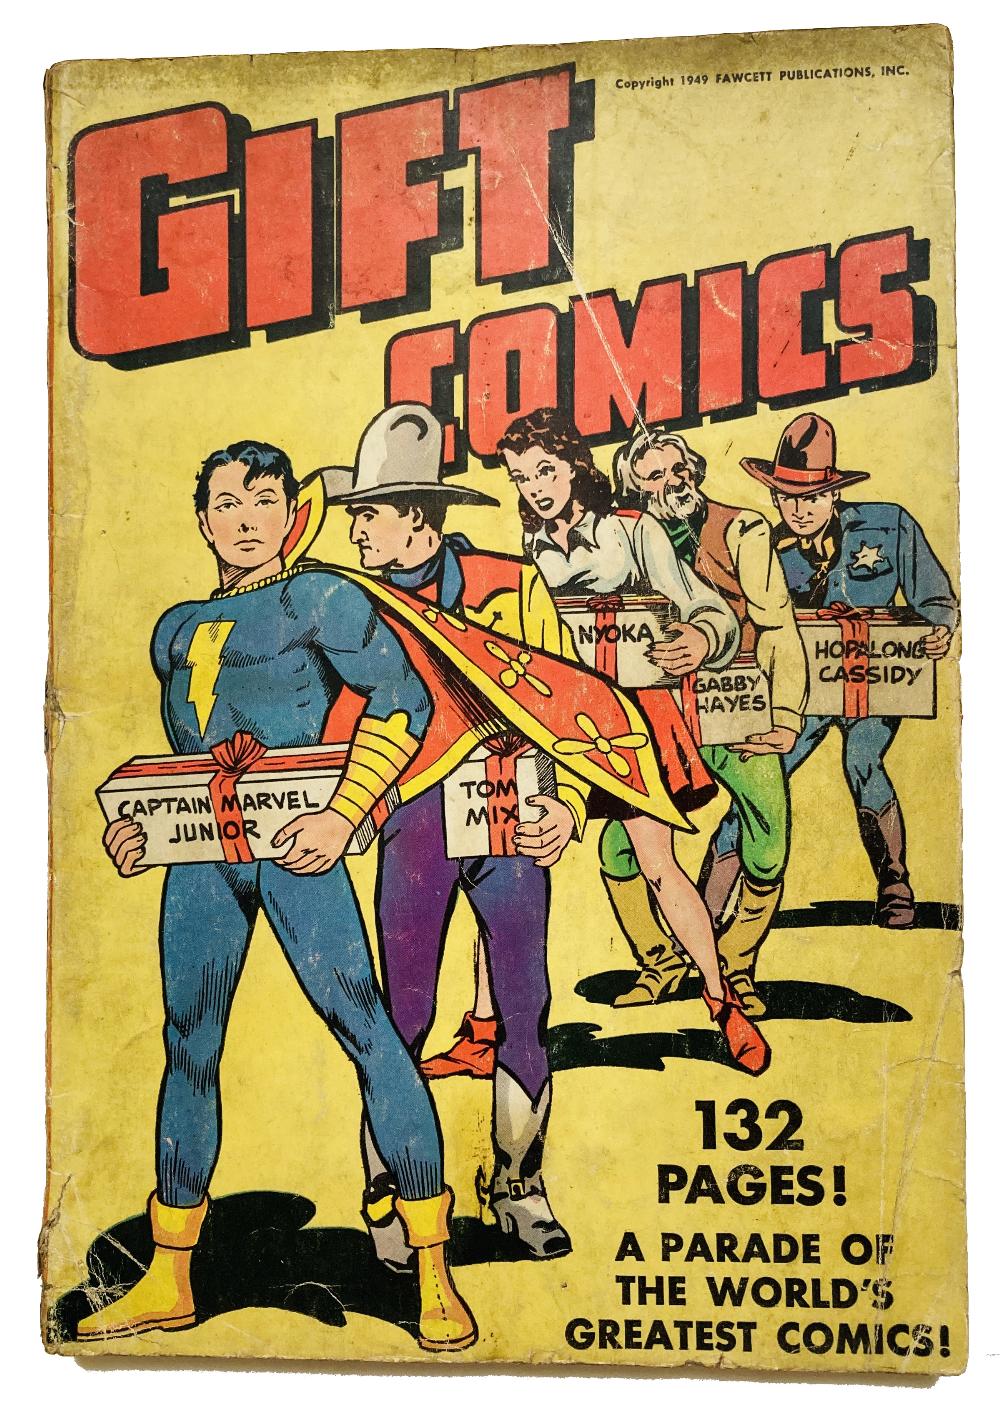 Gift Comics n.n. (Fawcett 1949) enclosing Captain Marvel Jr #74, Tom Mix Western #18, Nyoka the